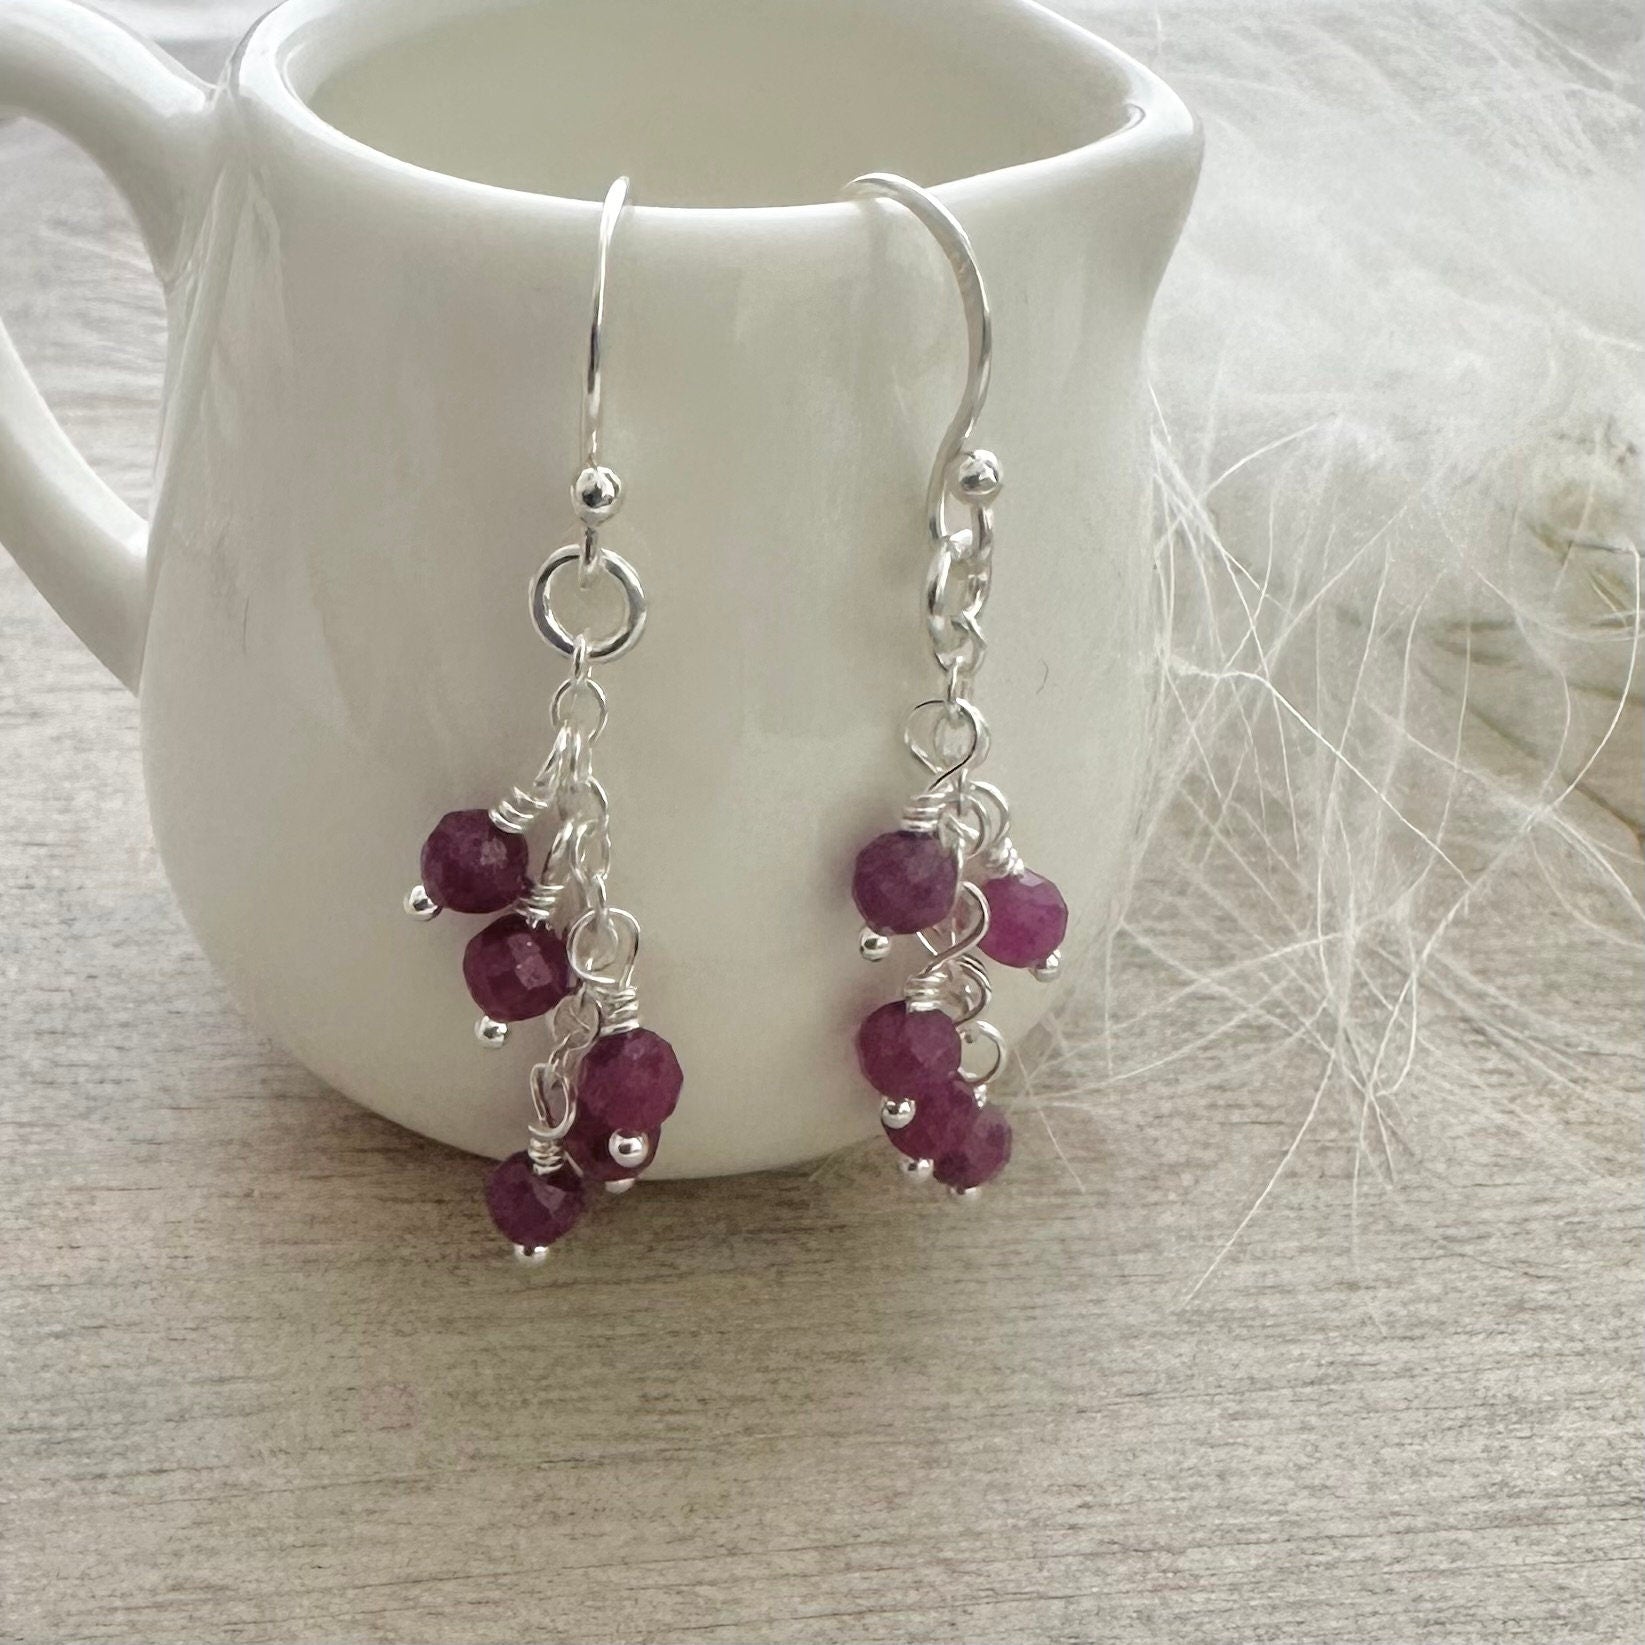 Ruby Necklace Earrings Set, July Birthstone Sterling Silver - Dainty Jewellery Gift for Women